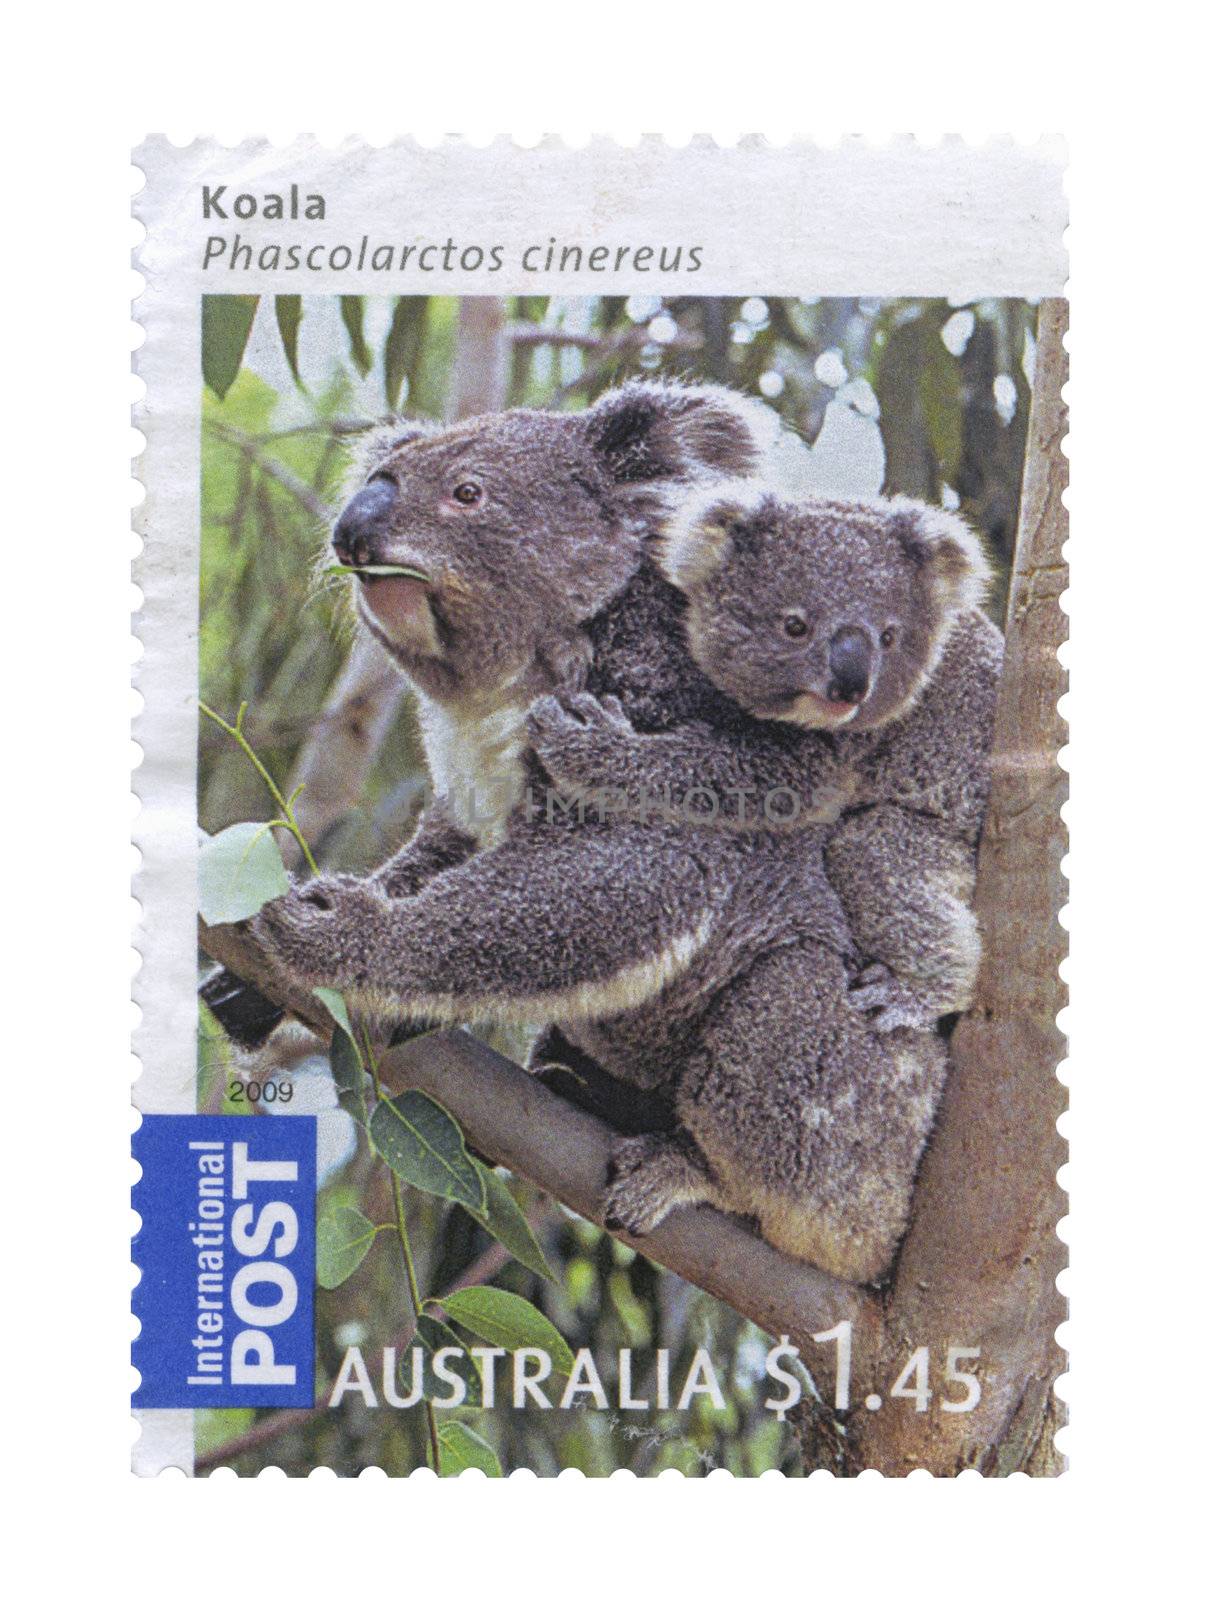 Koala bear by instinia